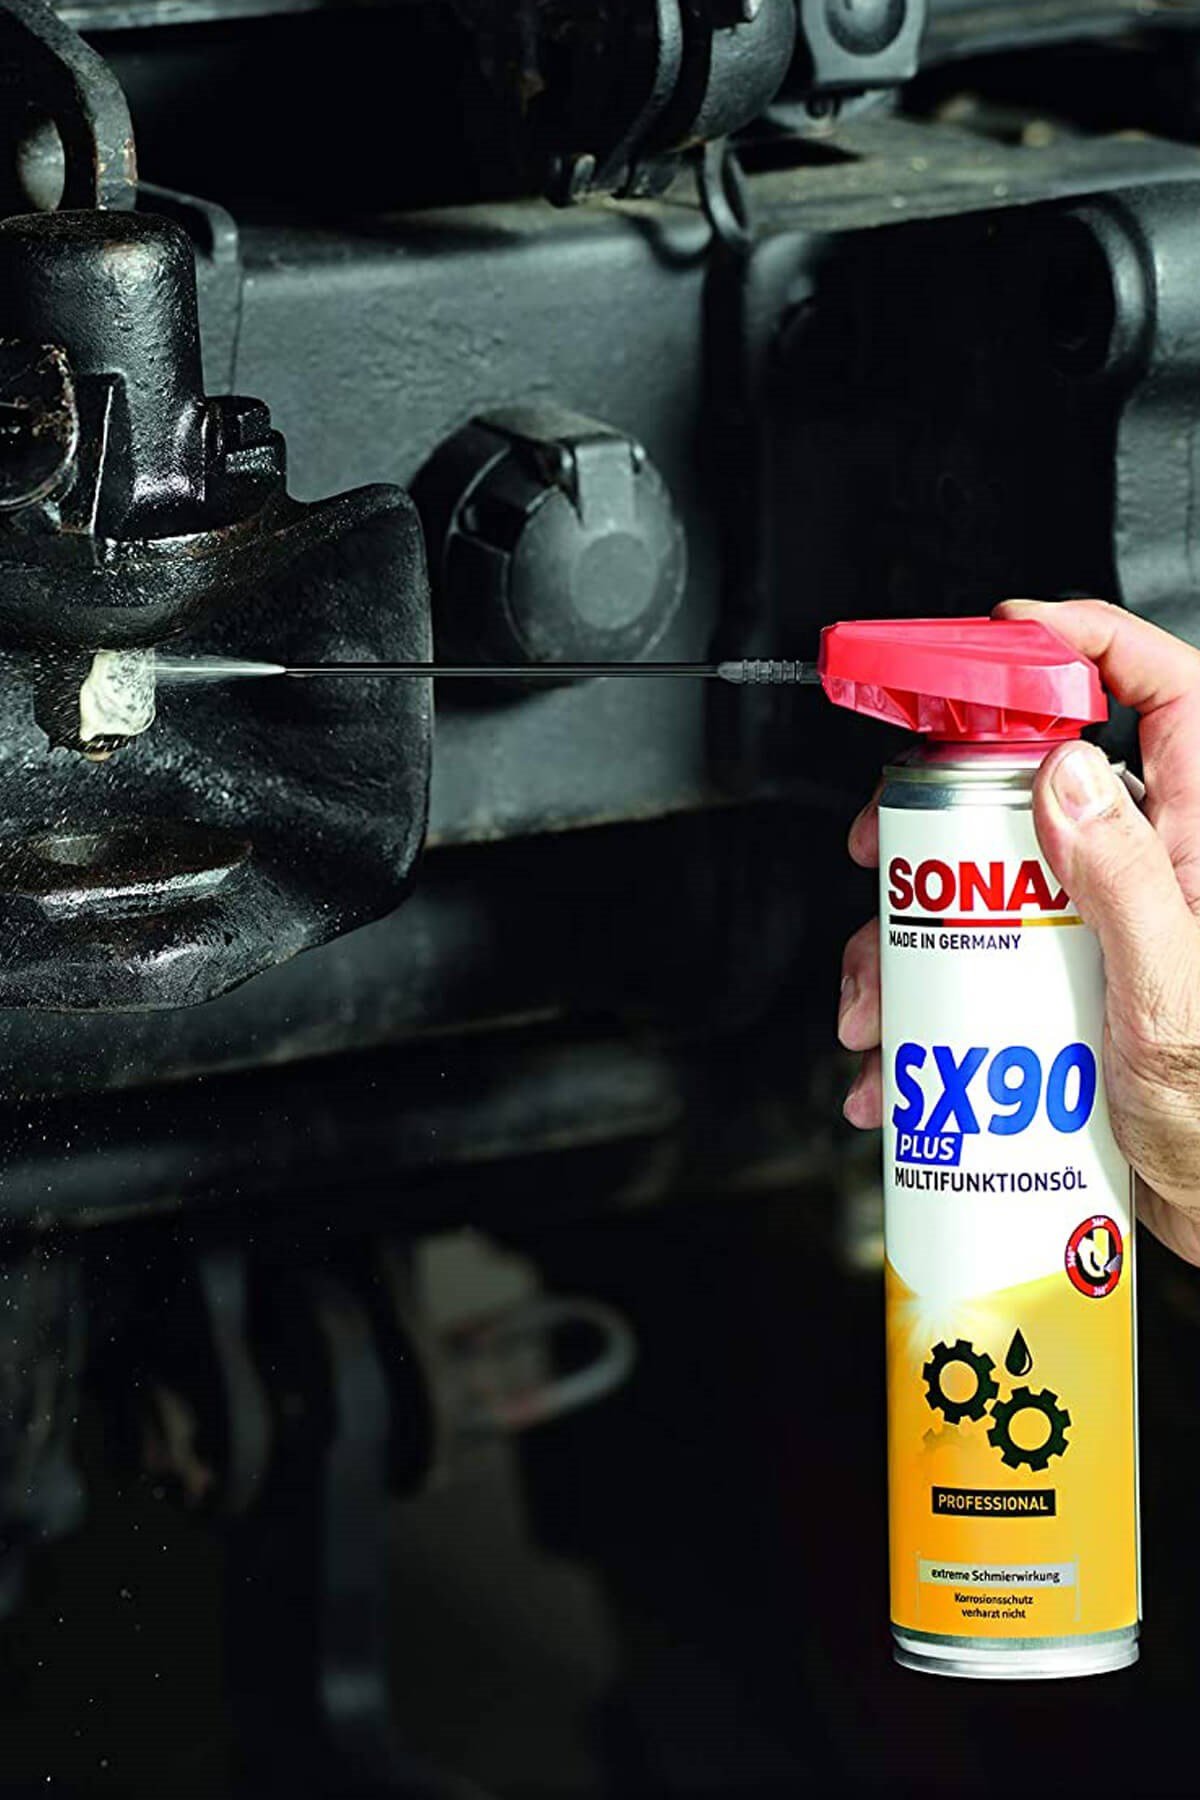 SONAX SX90 PLUS สเปรย์น้ำมันสารพัดประโยชน์ รุ่นใหม่ หัวฉีดพิเศษ